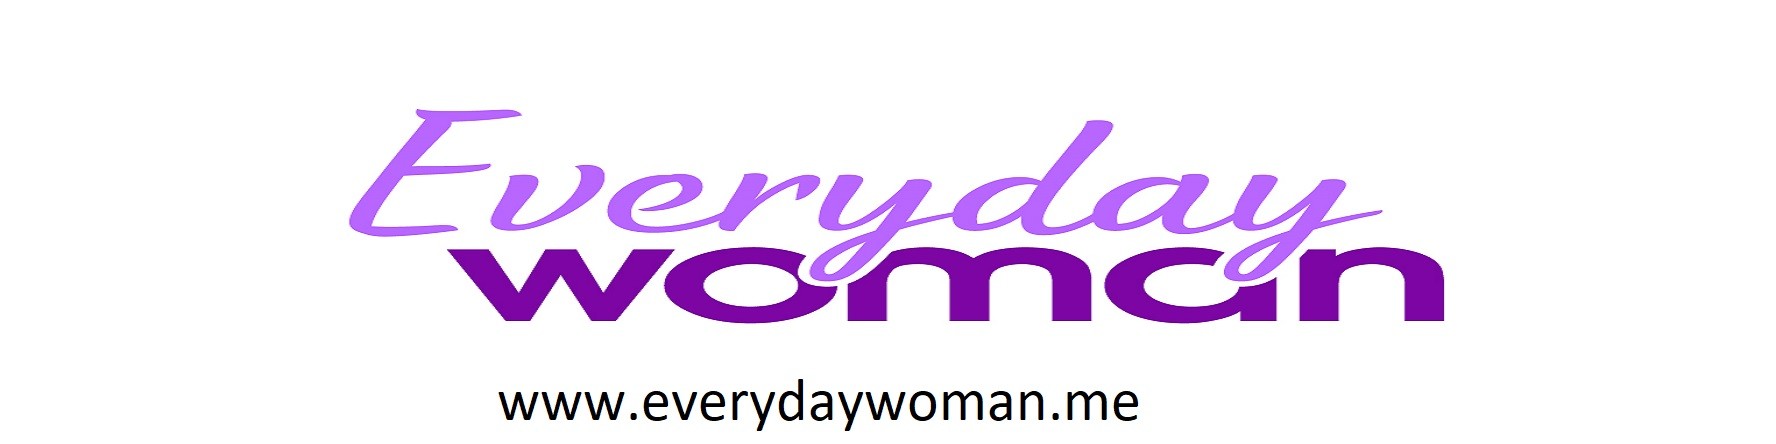 Everyday Woman logo